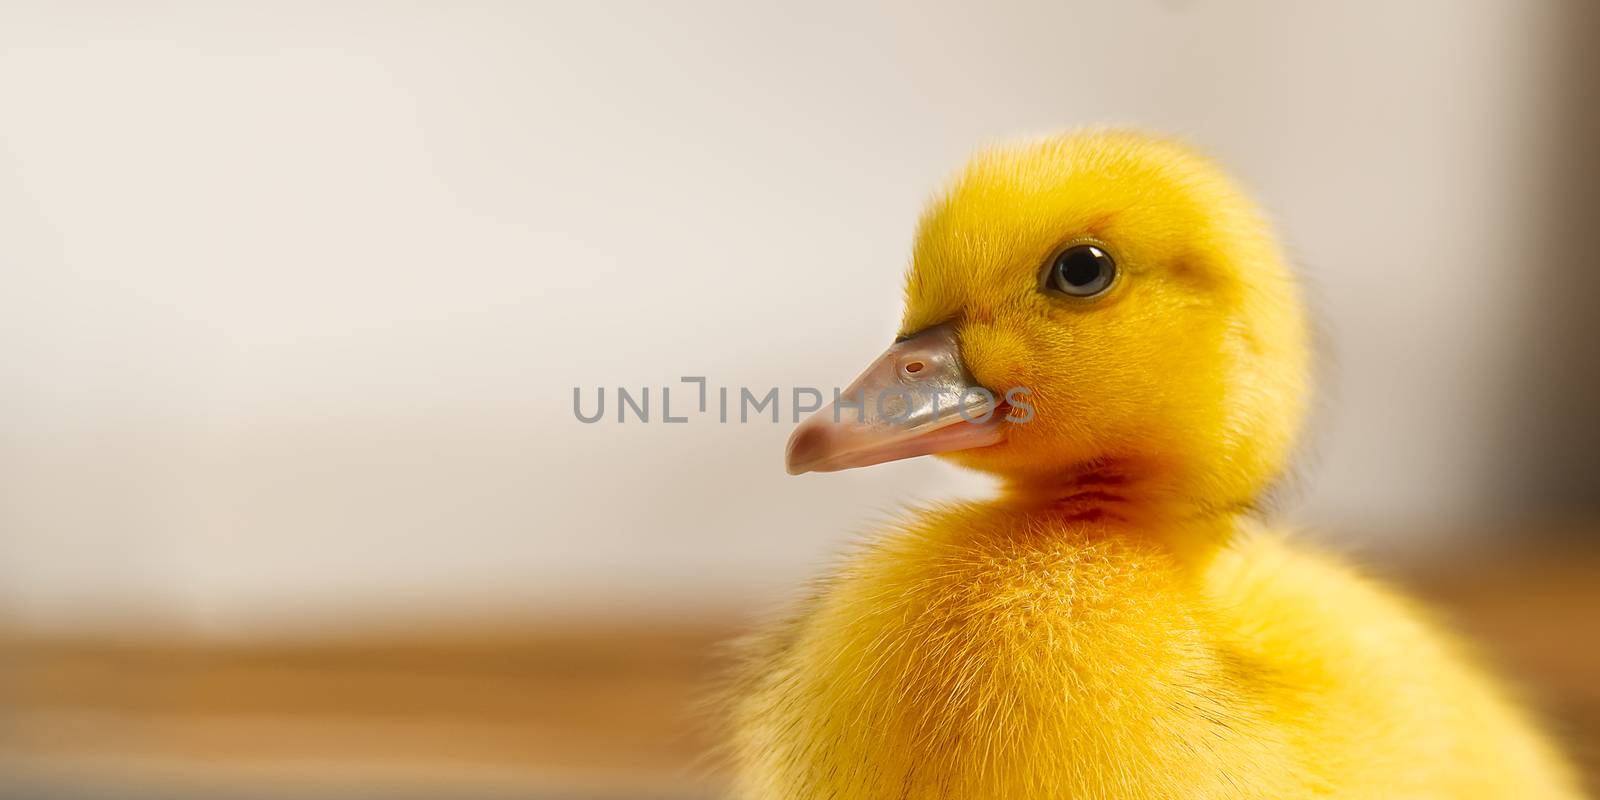 Newborn cute yellow little duckling close up. portrait of yellow duckling